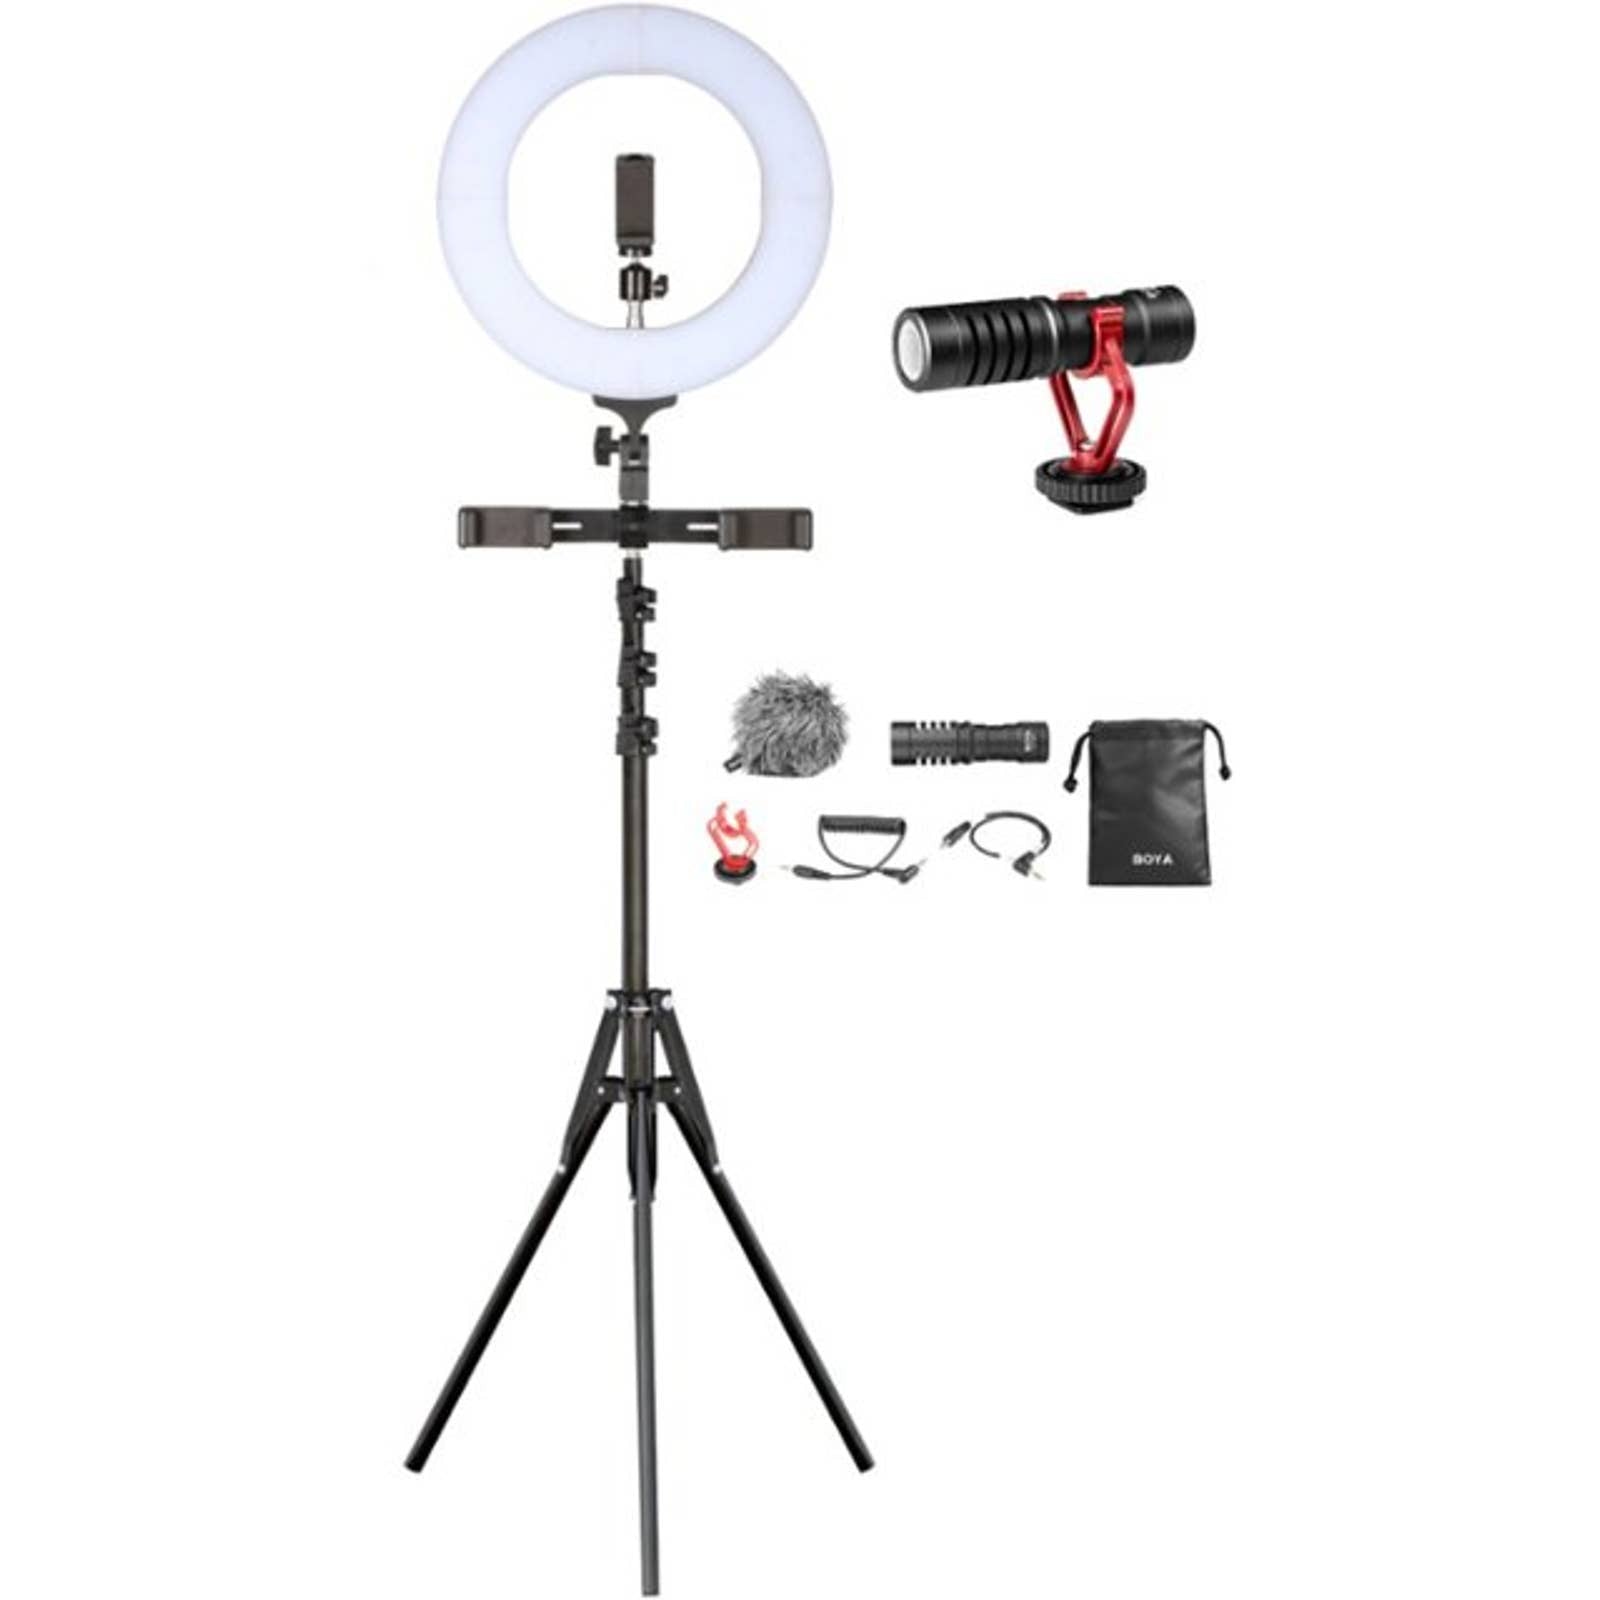 Sunpak - VGU-LED336-14 Ultimate Vlogging Kit with BOYA Cardioid Microphone for Smartphones and Cameras - Black